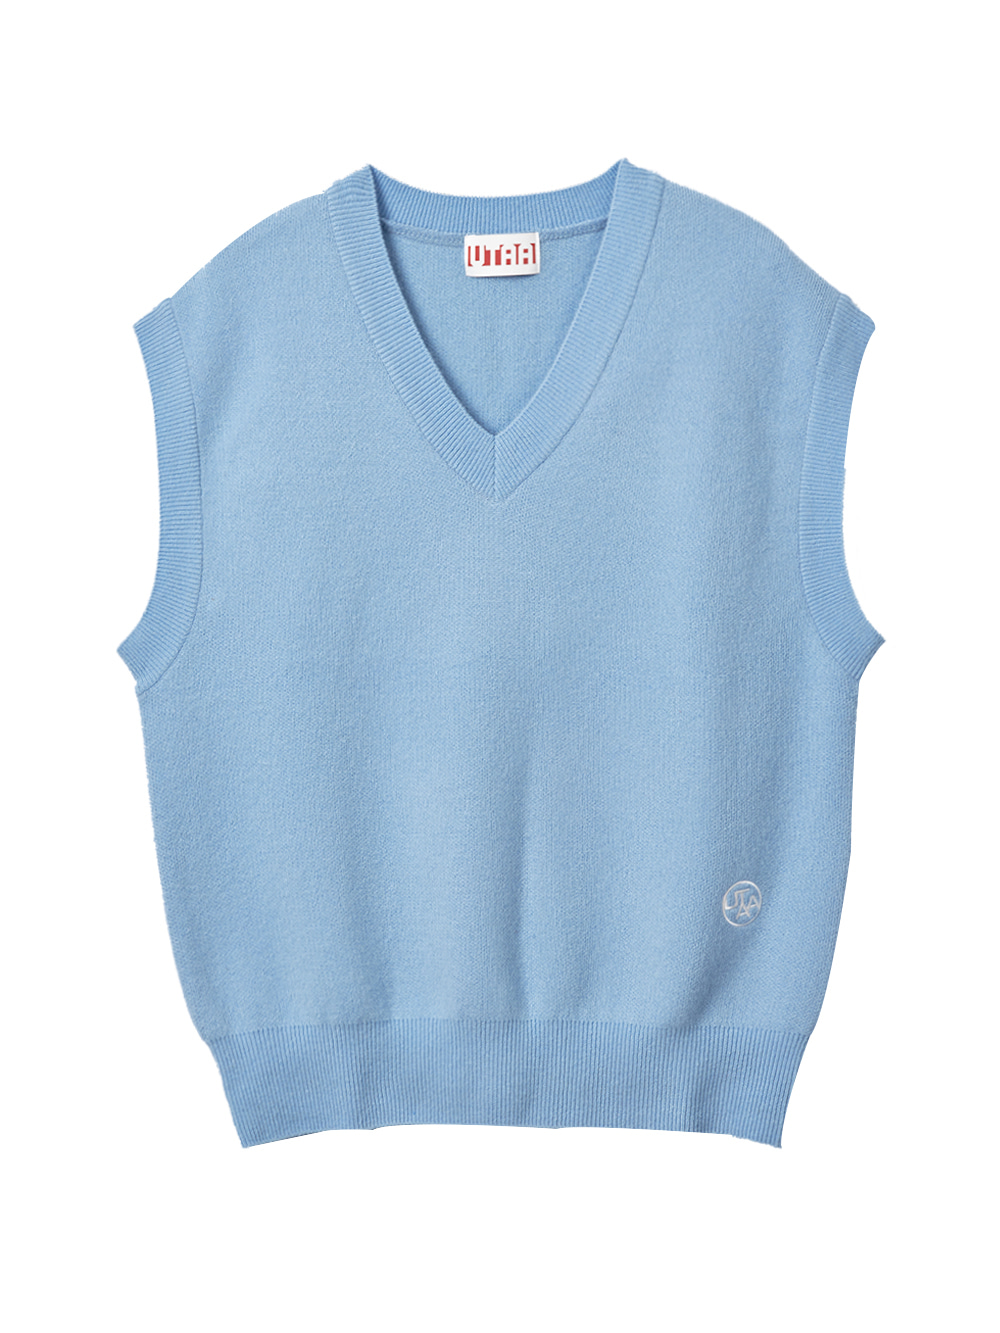 UTAA Palette Over Fit Knit Vest : Sky Blue (UB1KVF100SB)